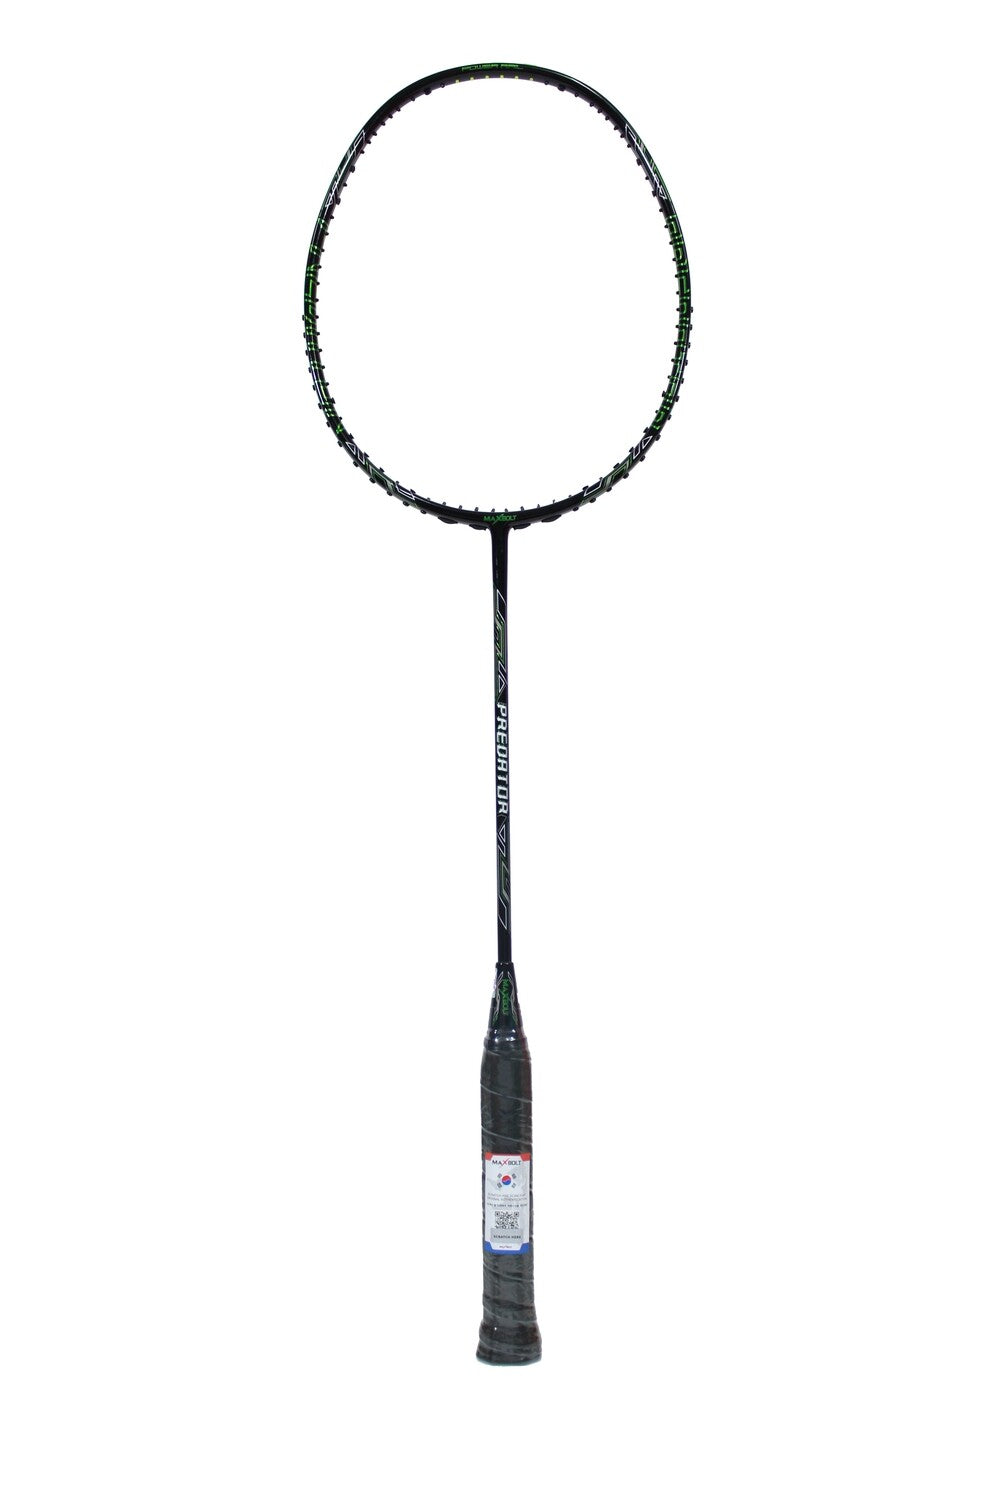 Maxbolt Predator Badminton Racket